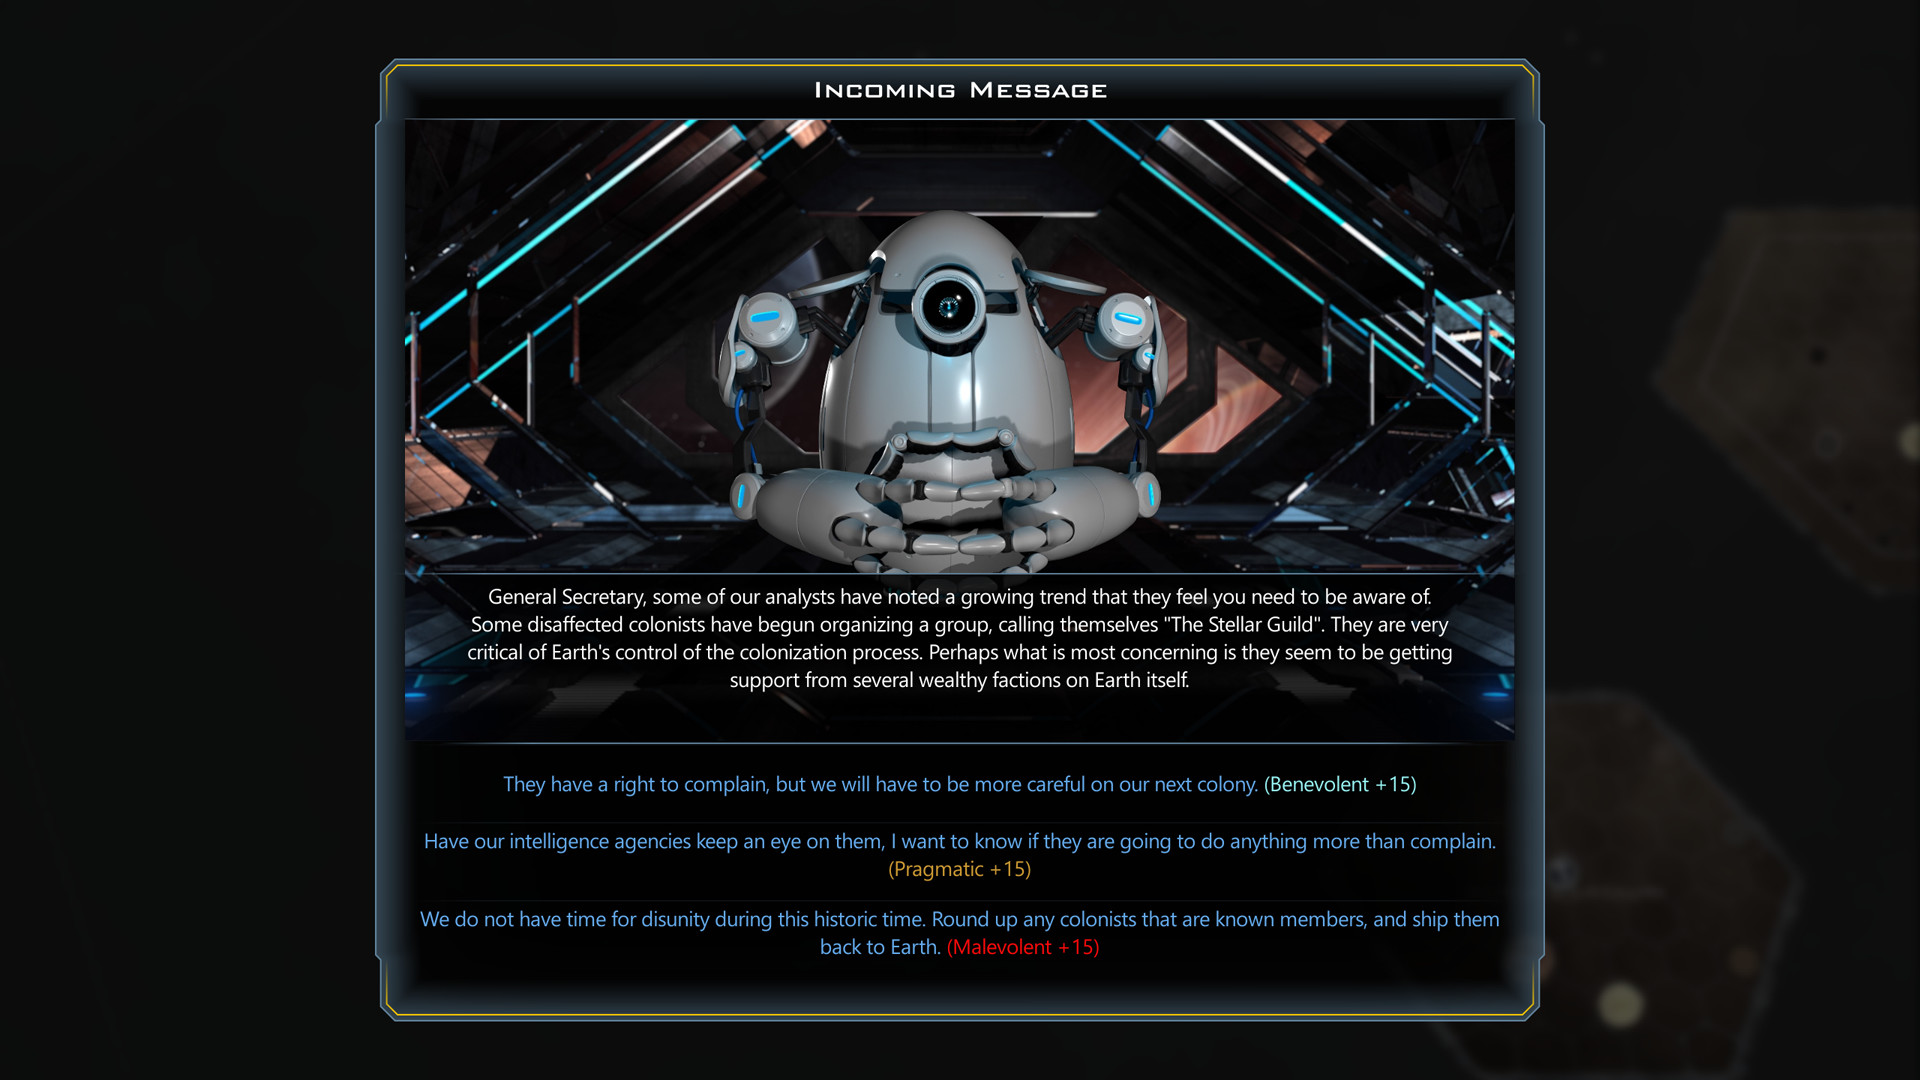 Galactic Civilizations III - Rise of the Terrans DLC screenshot